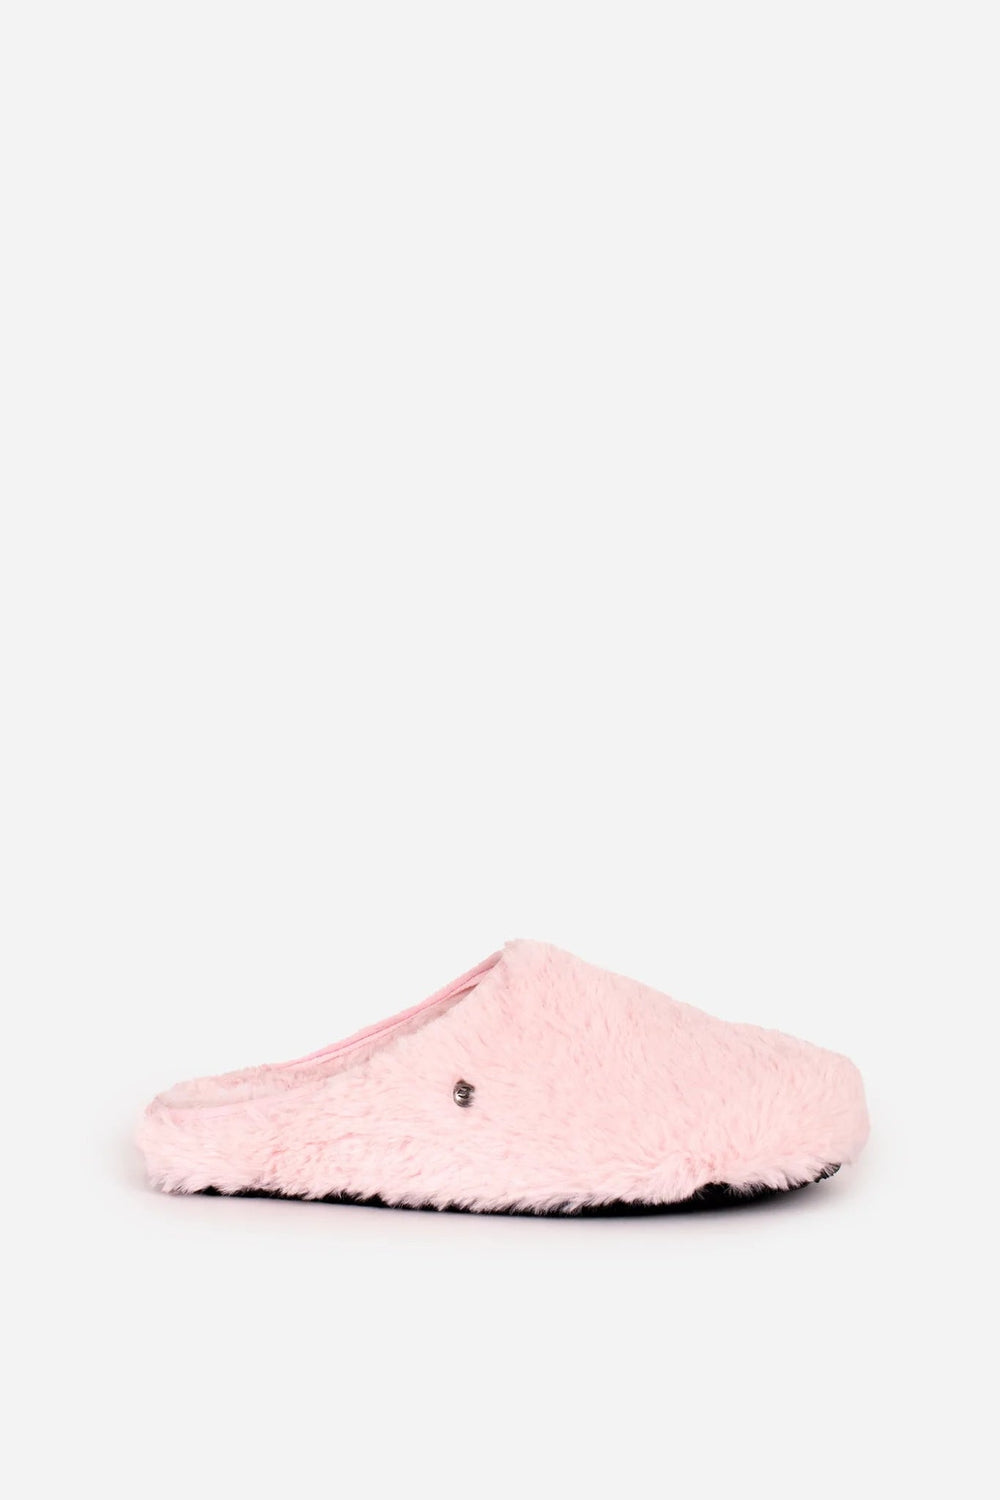 Brakeburn fluffy Slip on slippers in pink - Crabtree Cottage